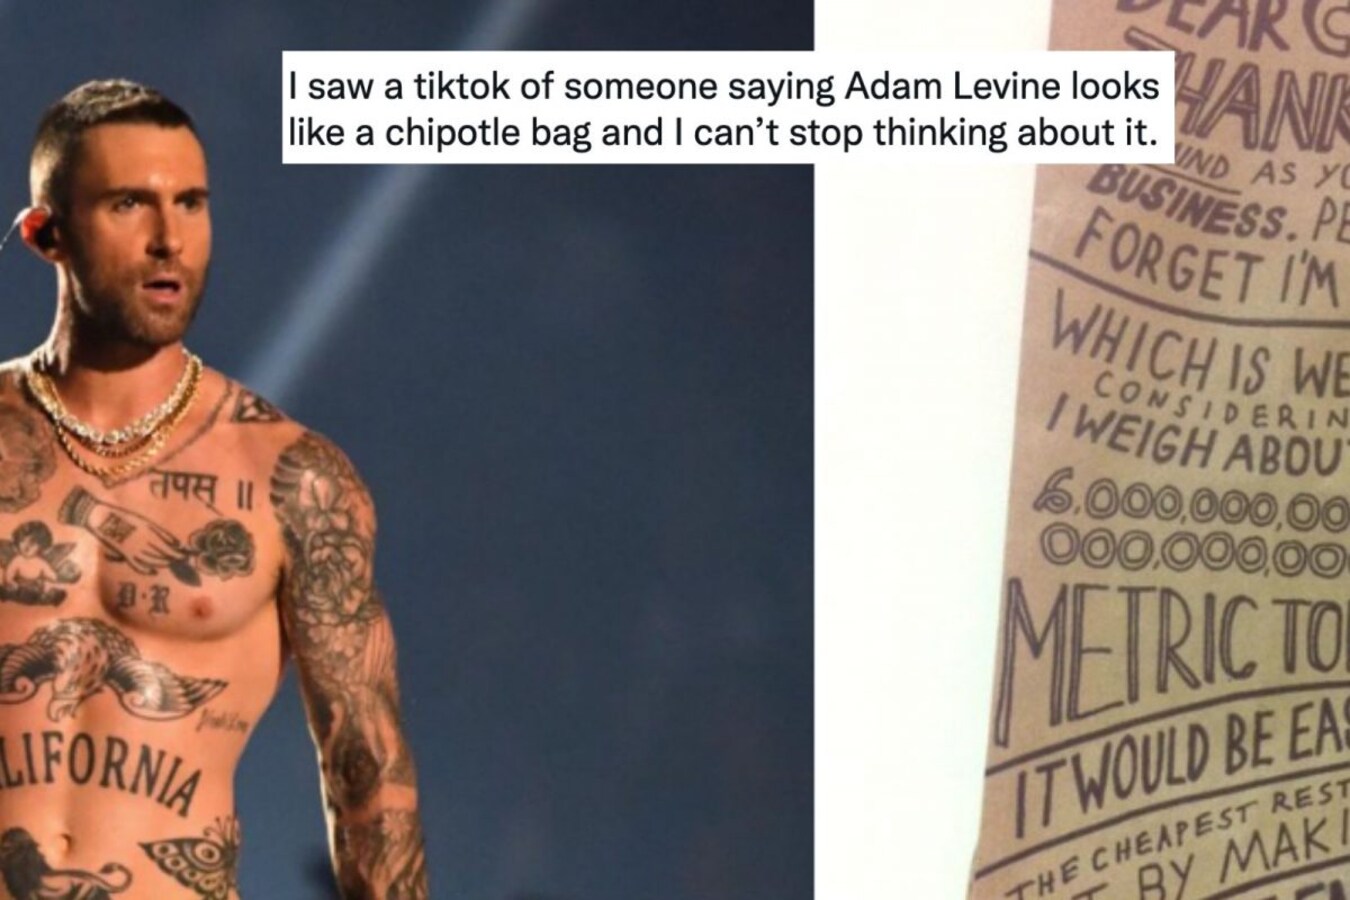 Tweet Saying Adam Levine Looks like a Chipotle Bag Goes Viral, Netizens in  Splits